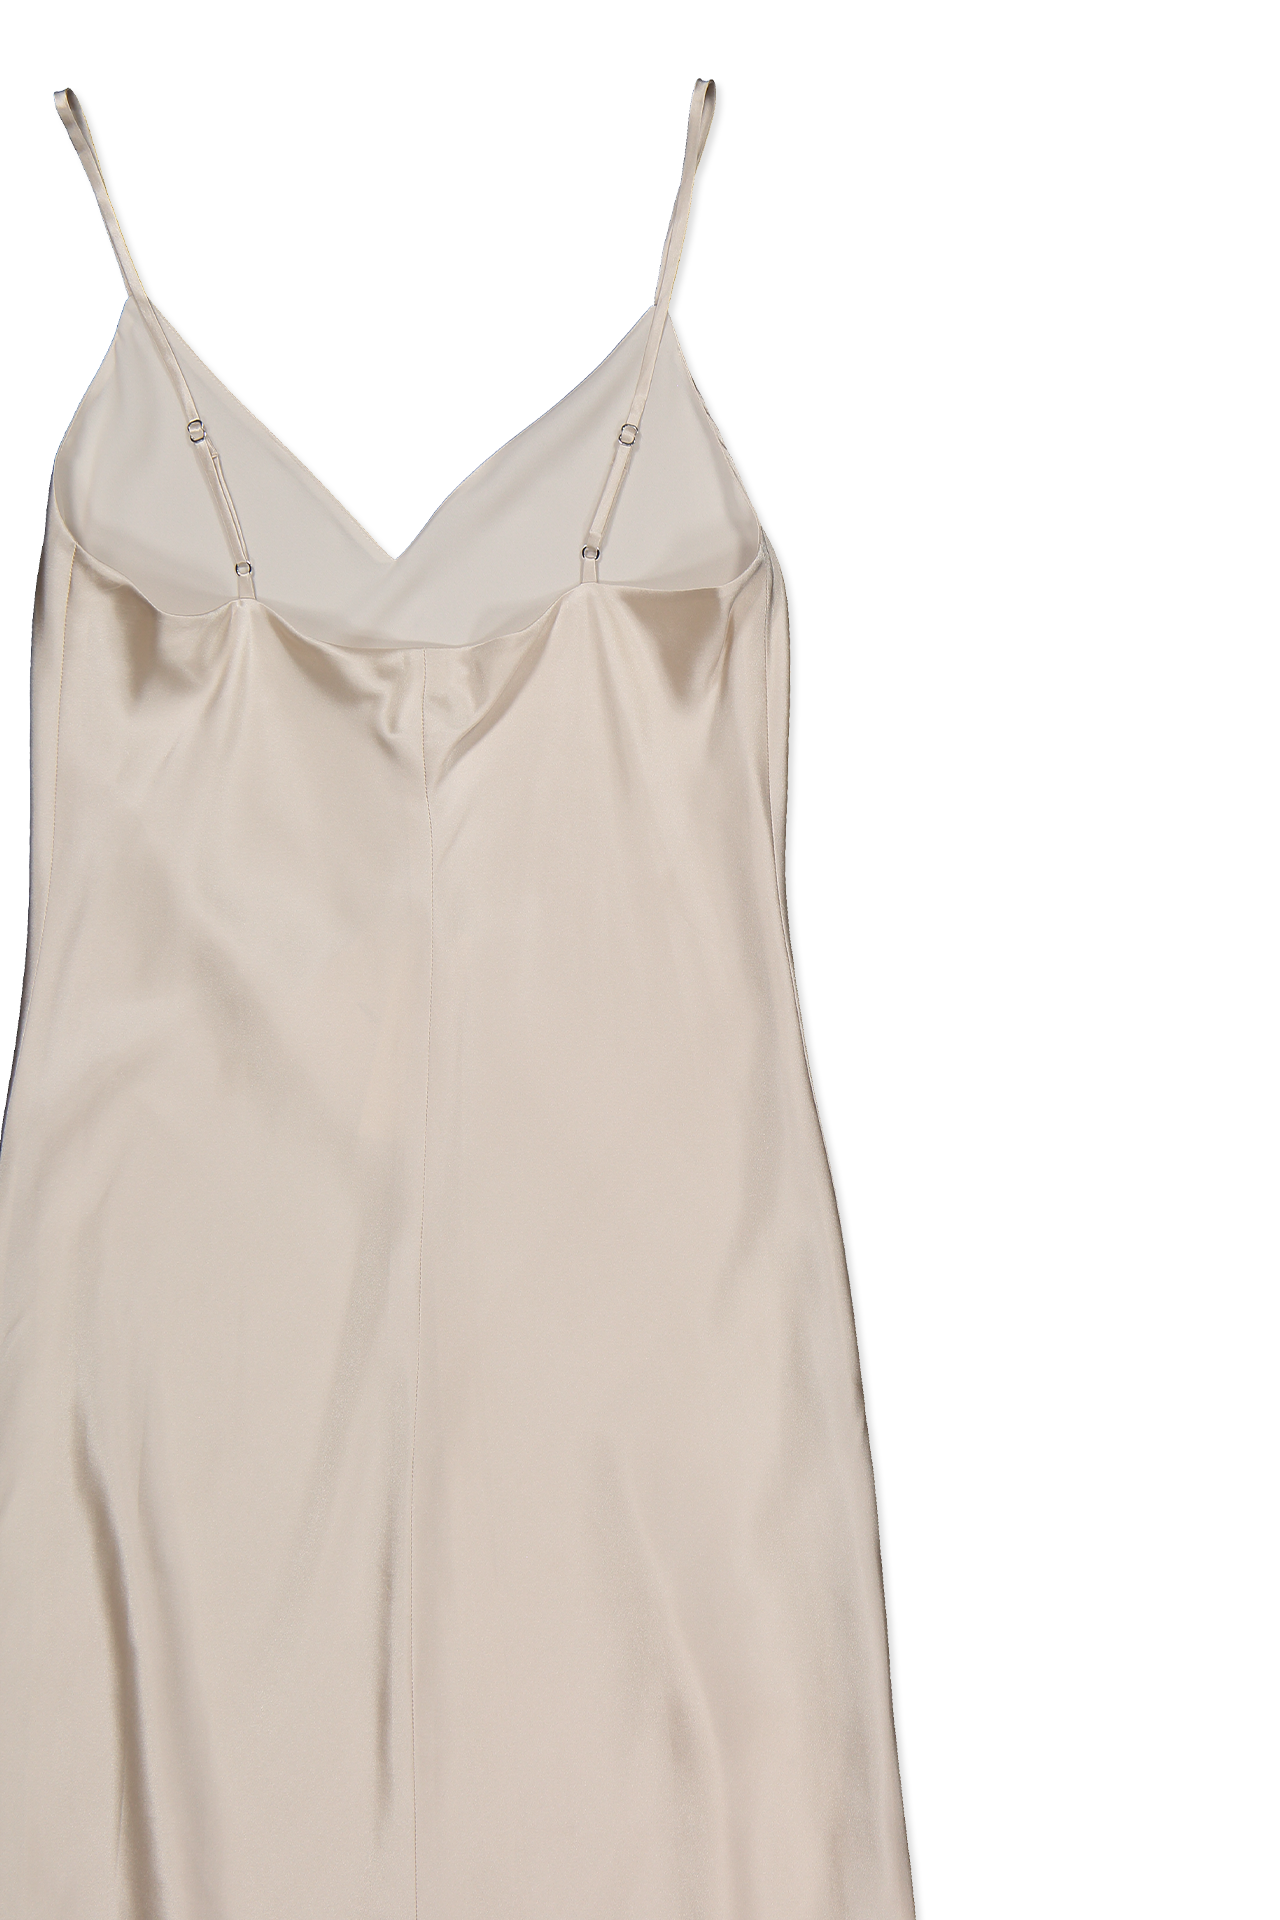 Lagence Jodie V-Neck Slip Dress Neutral Back Flat Image (6620465856627)